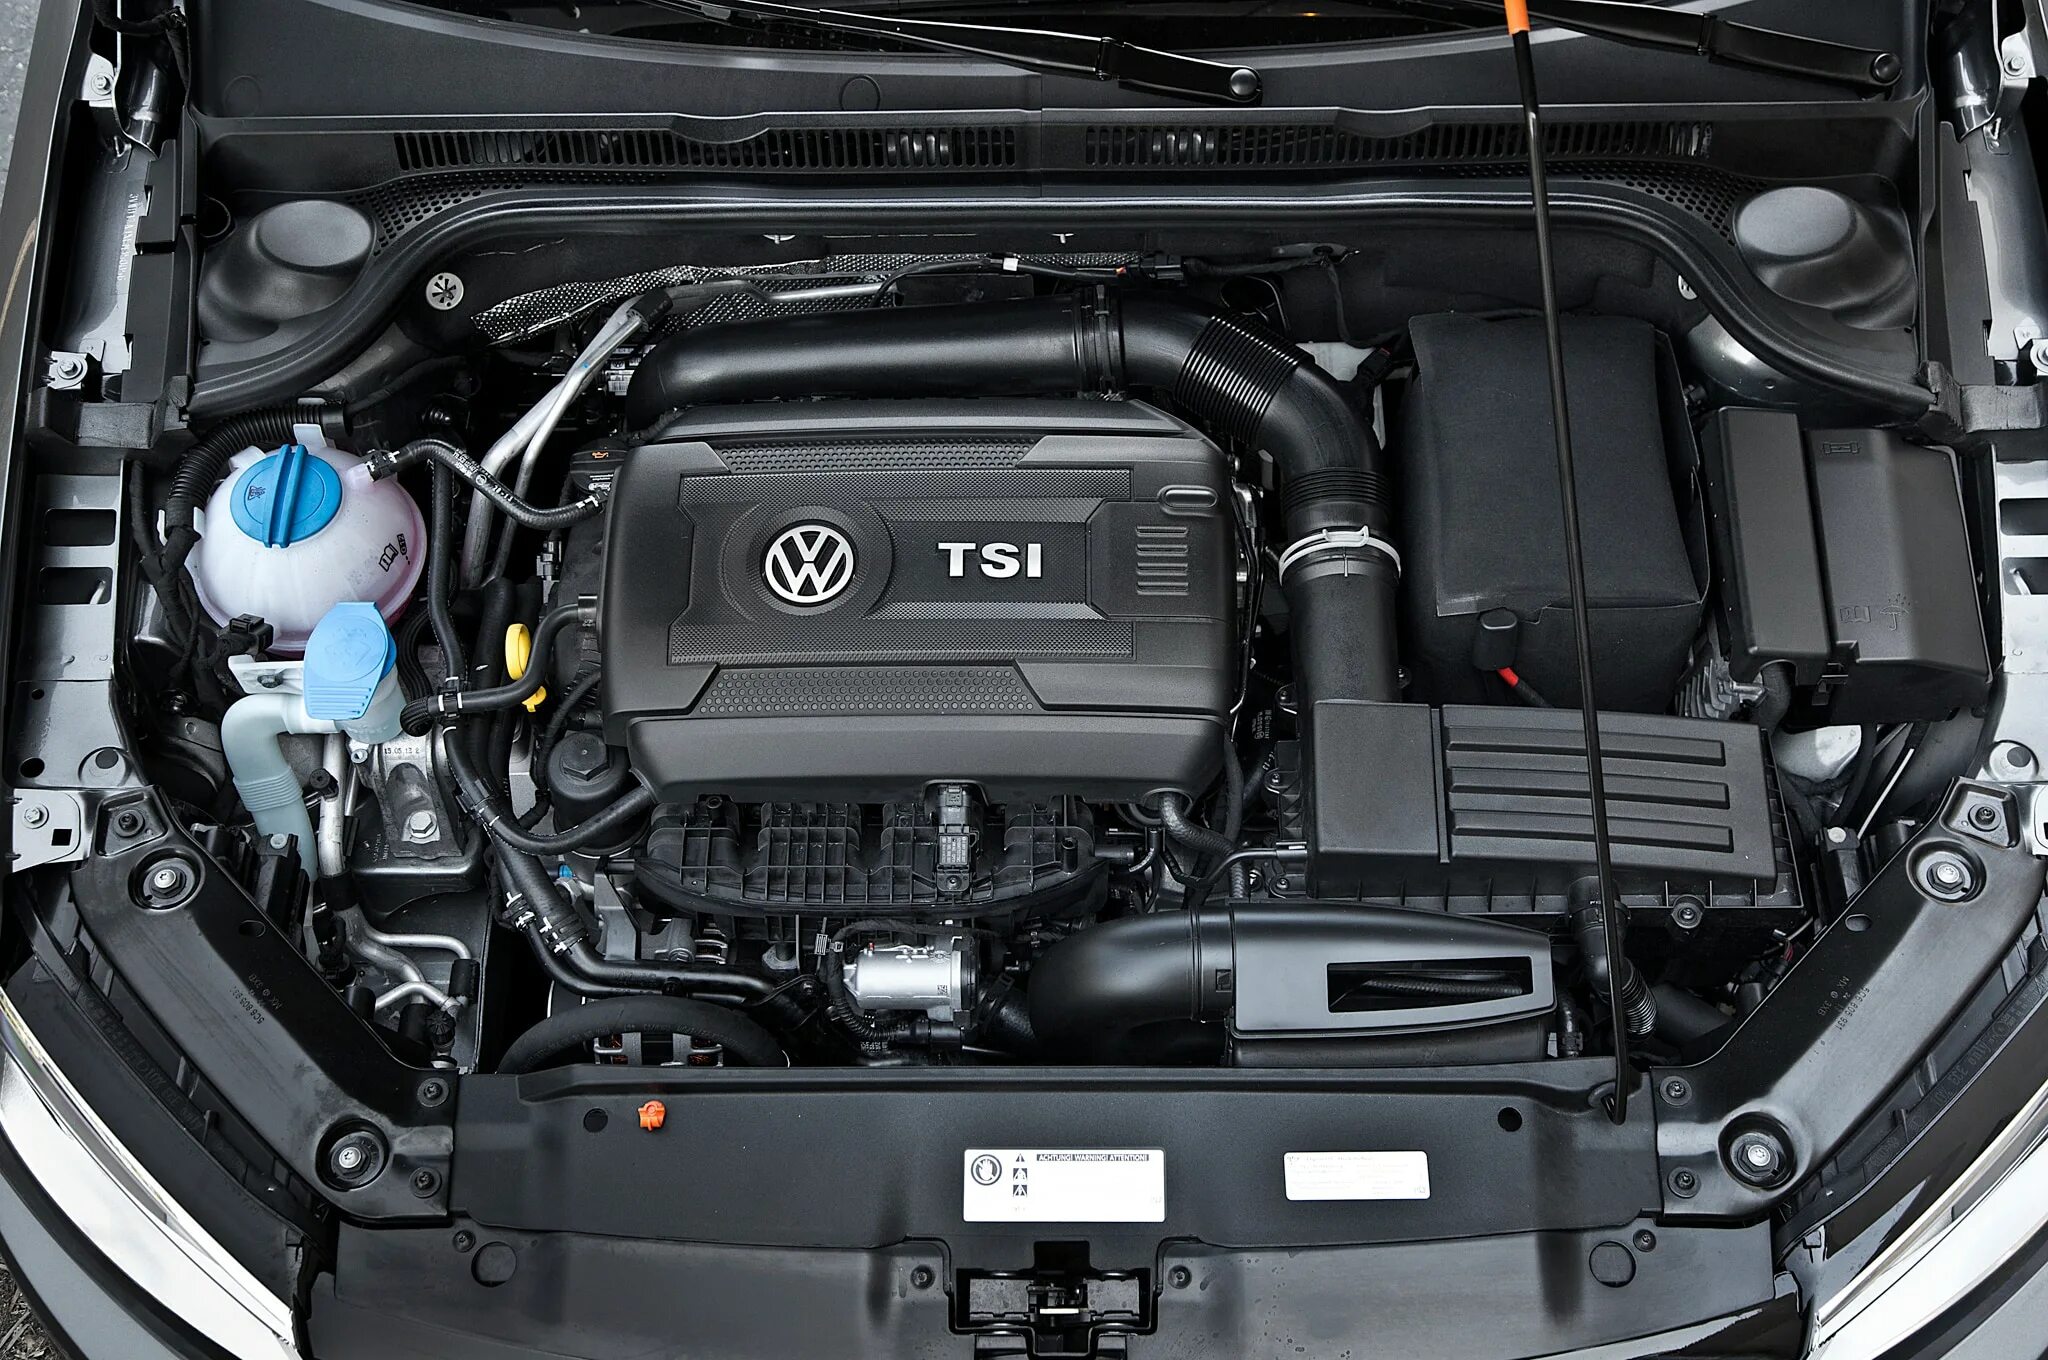 Двигатель Volkswagen TSI 2.0. Volkswagen Jetta 6 двигатели. VW Jetta 1-4 TSI двигатель. Фольксваген Джетта двигатель 2.0. Купить мотор volkswagen